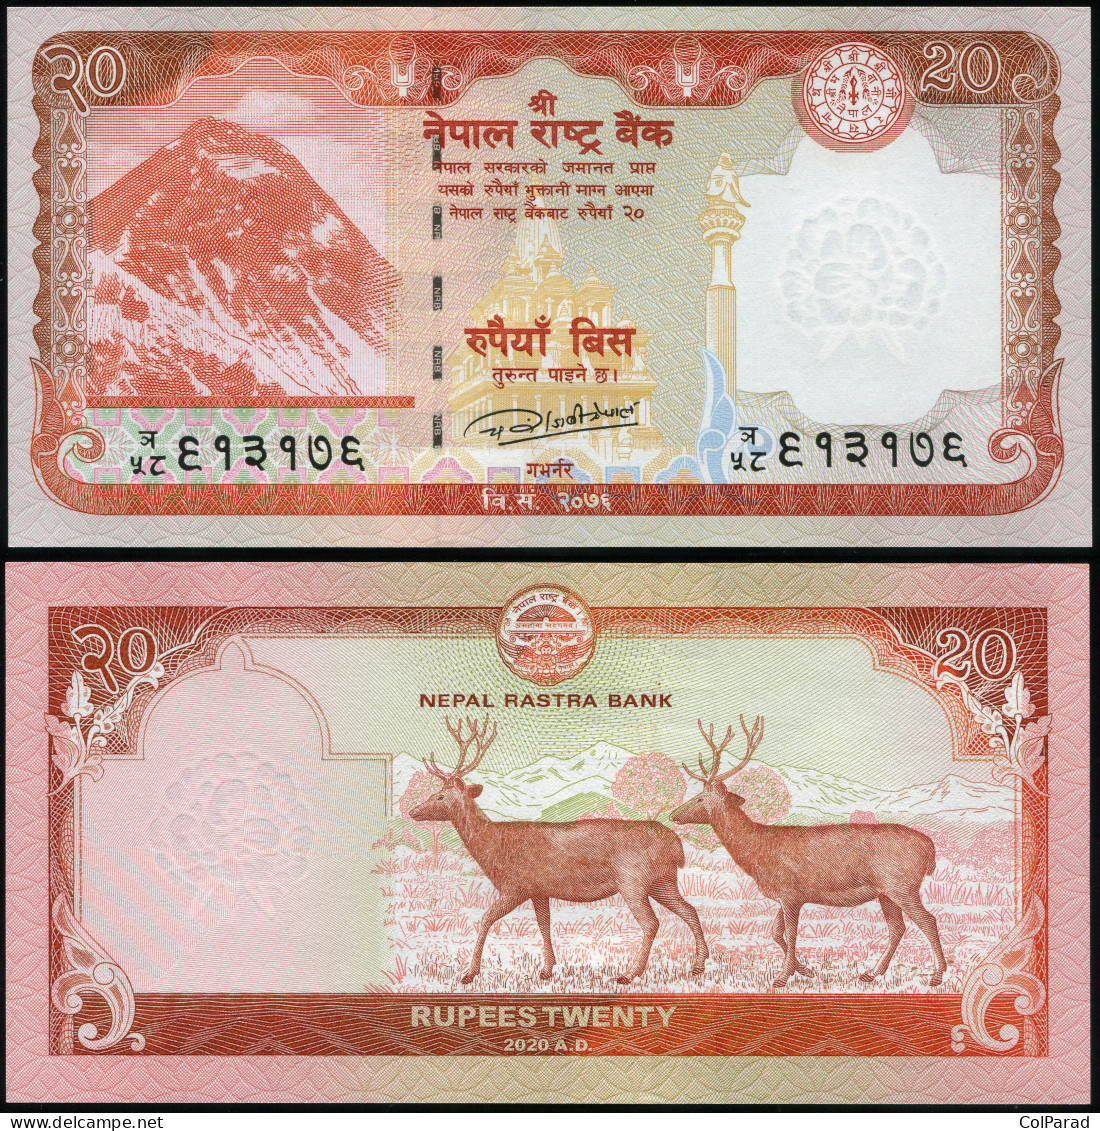 NEPAL 20 RUPEES - 2020 - Paper Unc - P.78b Banknote - Nepal